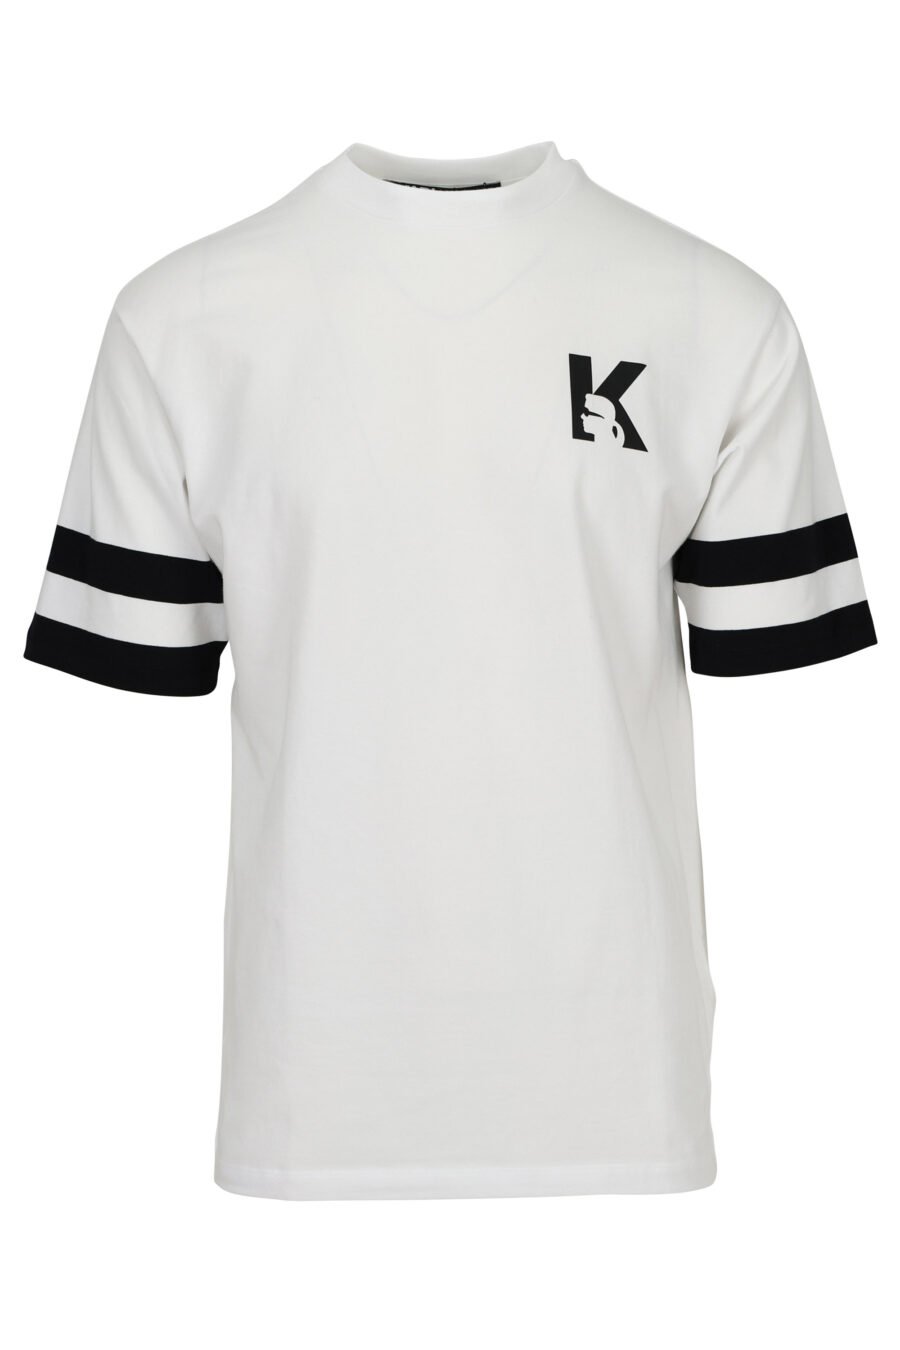 Camiseta blanca "oversize" con lineas en mangas azules y minilogo - 4062226788144